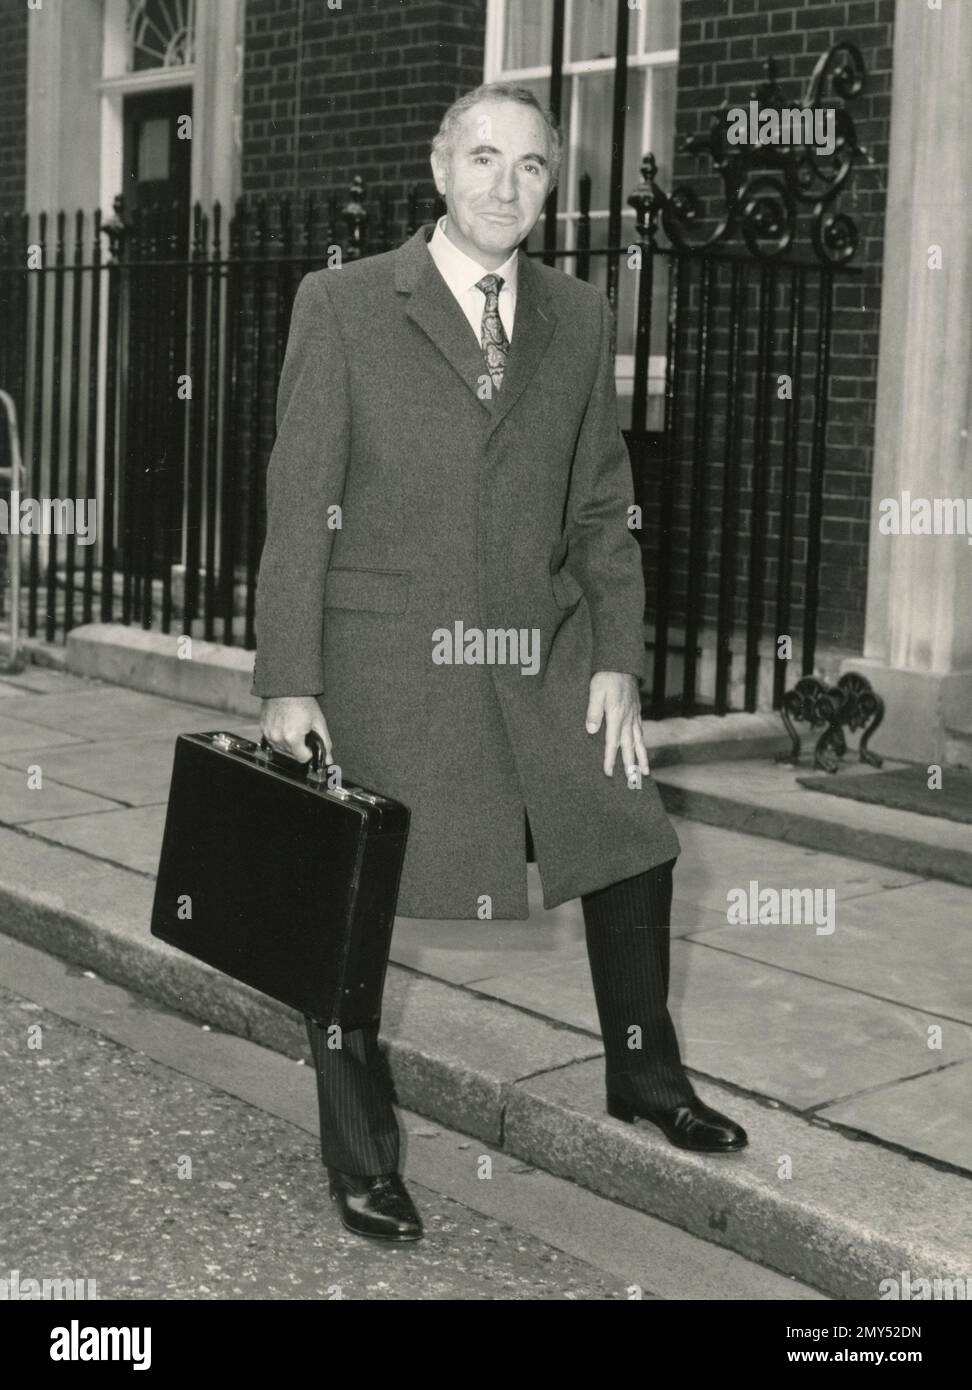 Actor Nigel Hawthorne as Sir Humphrey Appleby outside 10 Downing Street, London UK 1980s Stock Photo